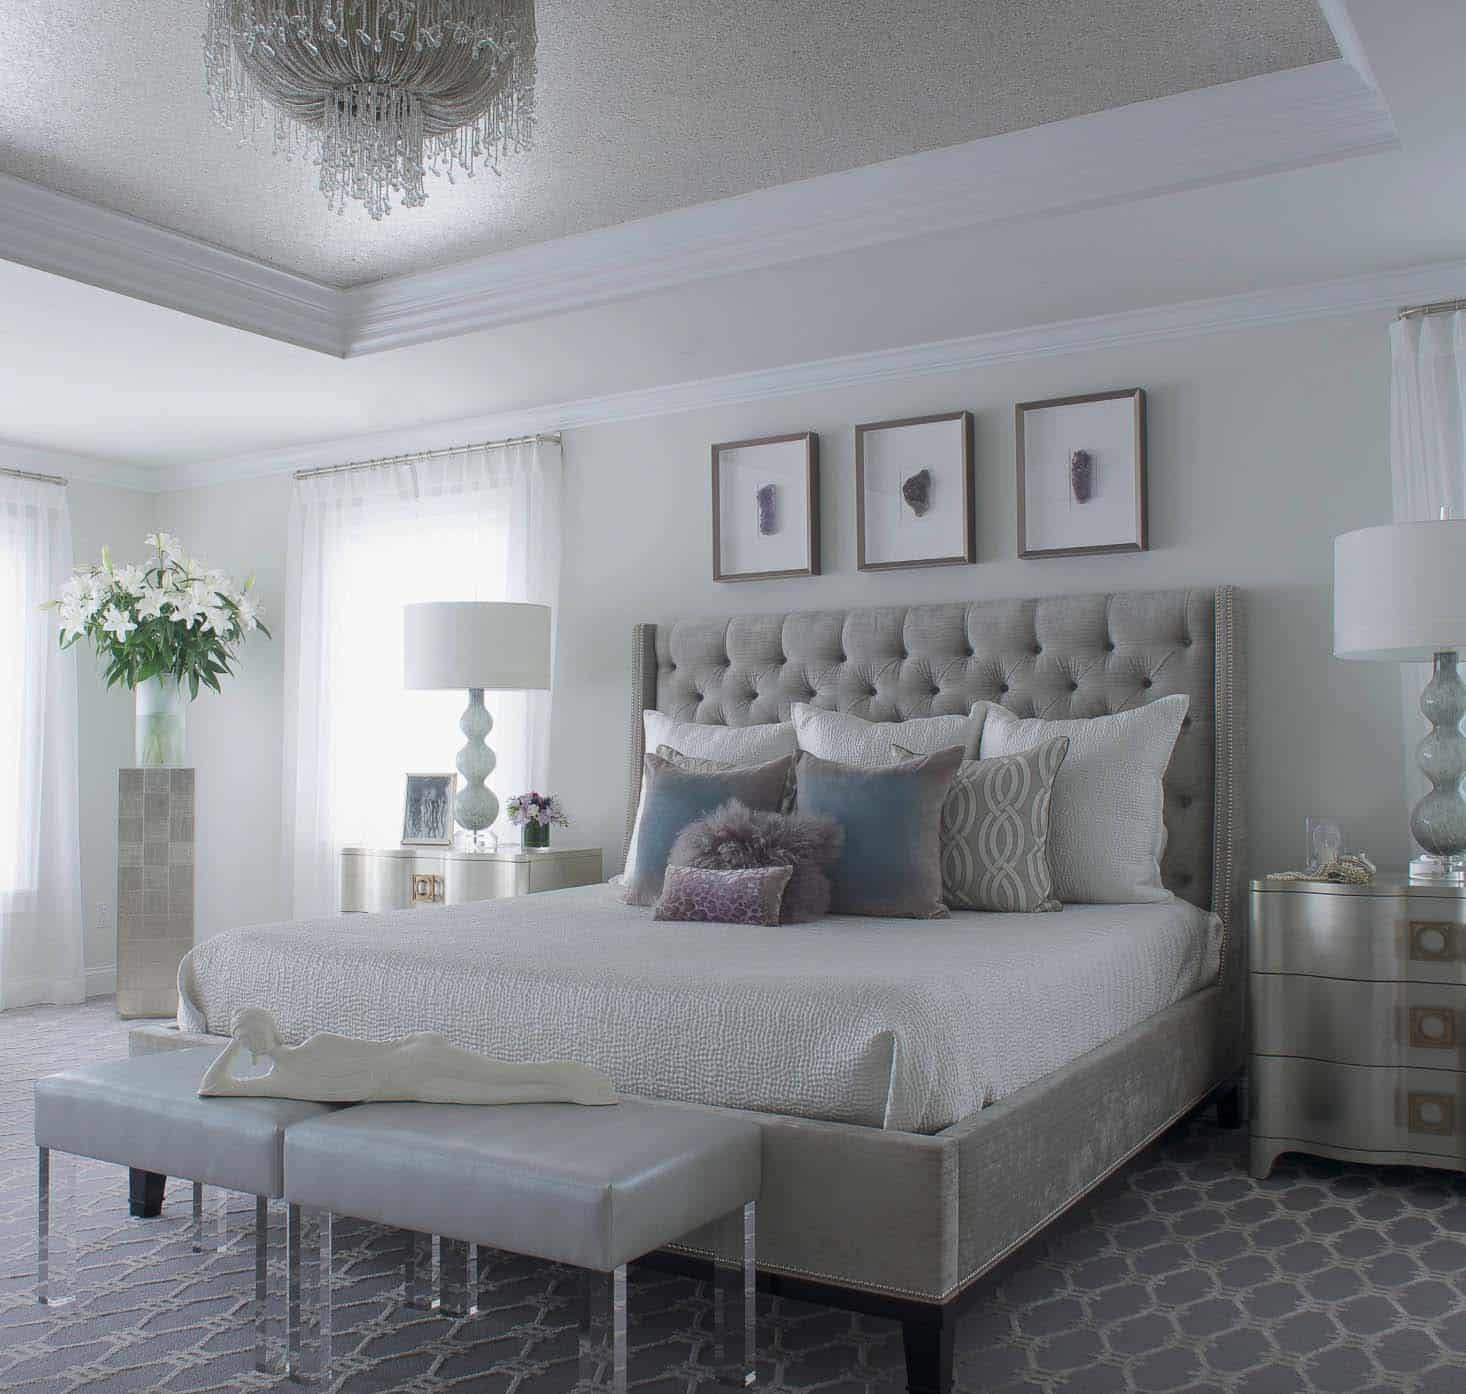 Master Bedroom Ideas
 20 Serene And Elegant Master Bedroom Decorating Ideas